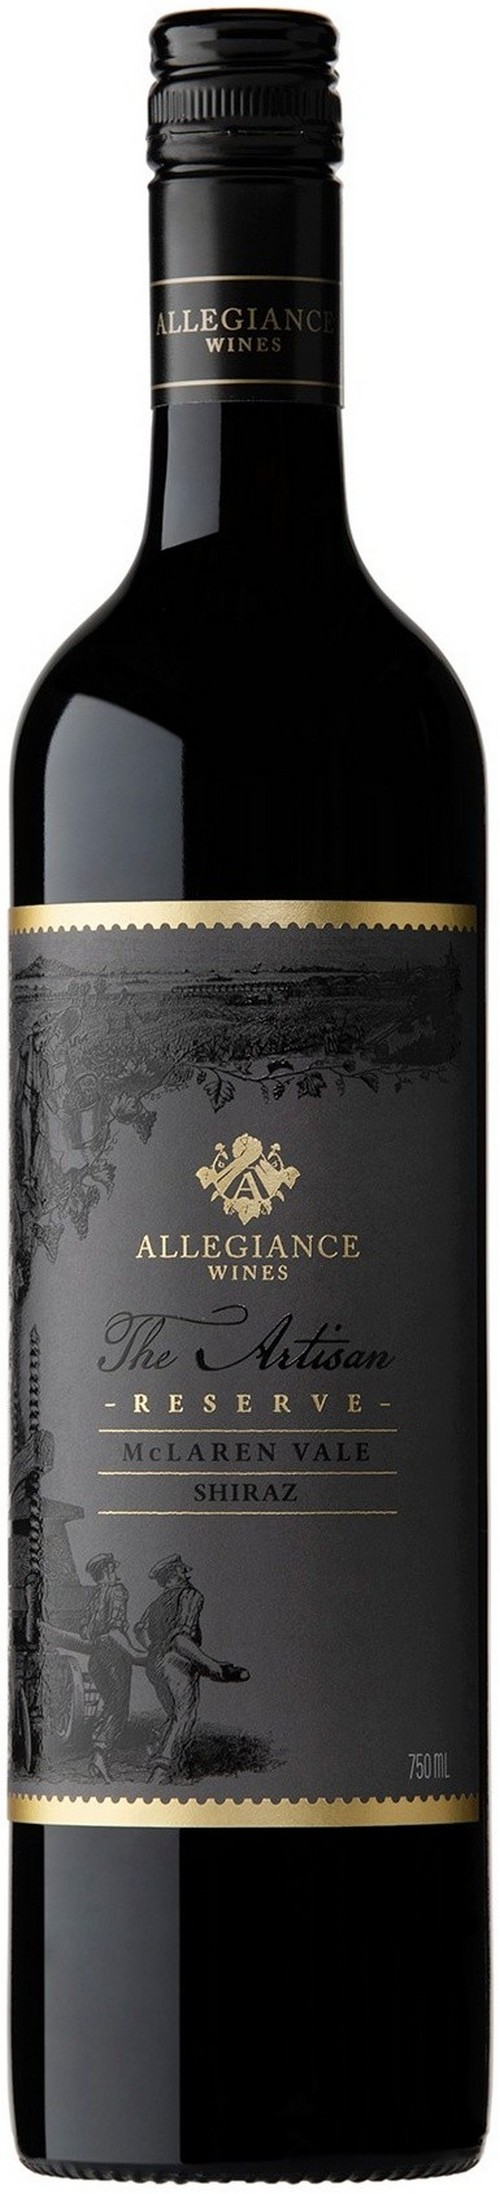 allegiance-wines-the-artisan-reserve-mclaren-vale-shiraz-2021